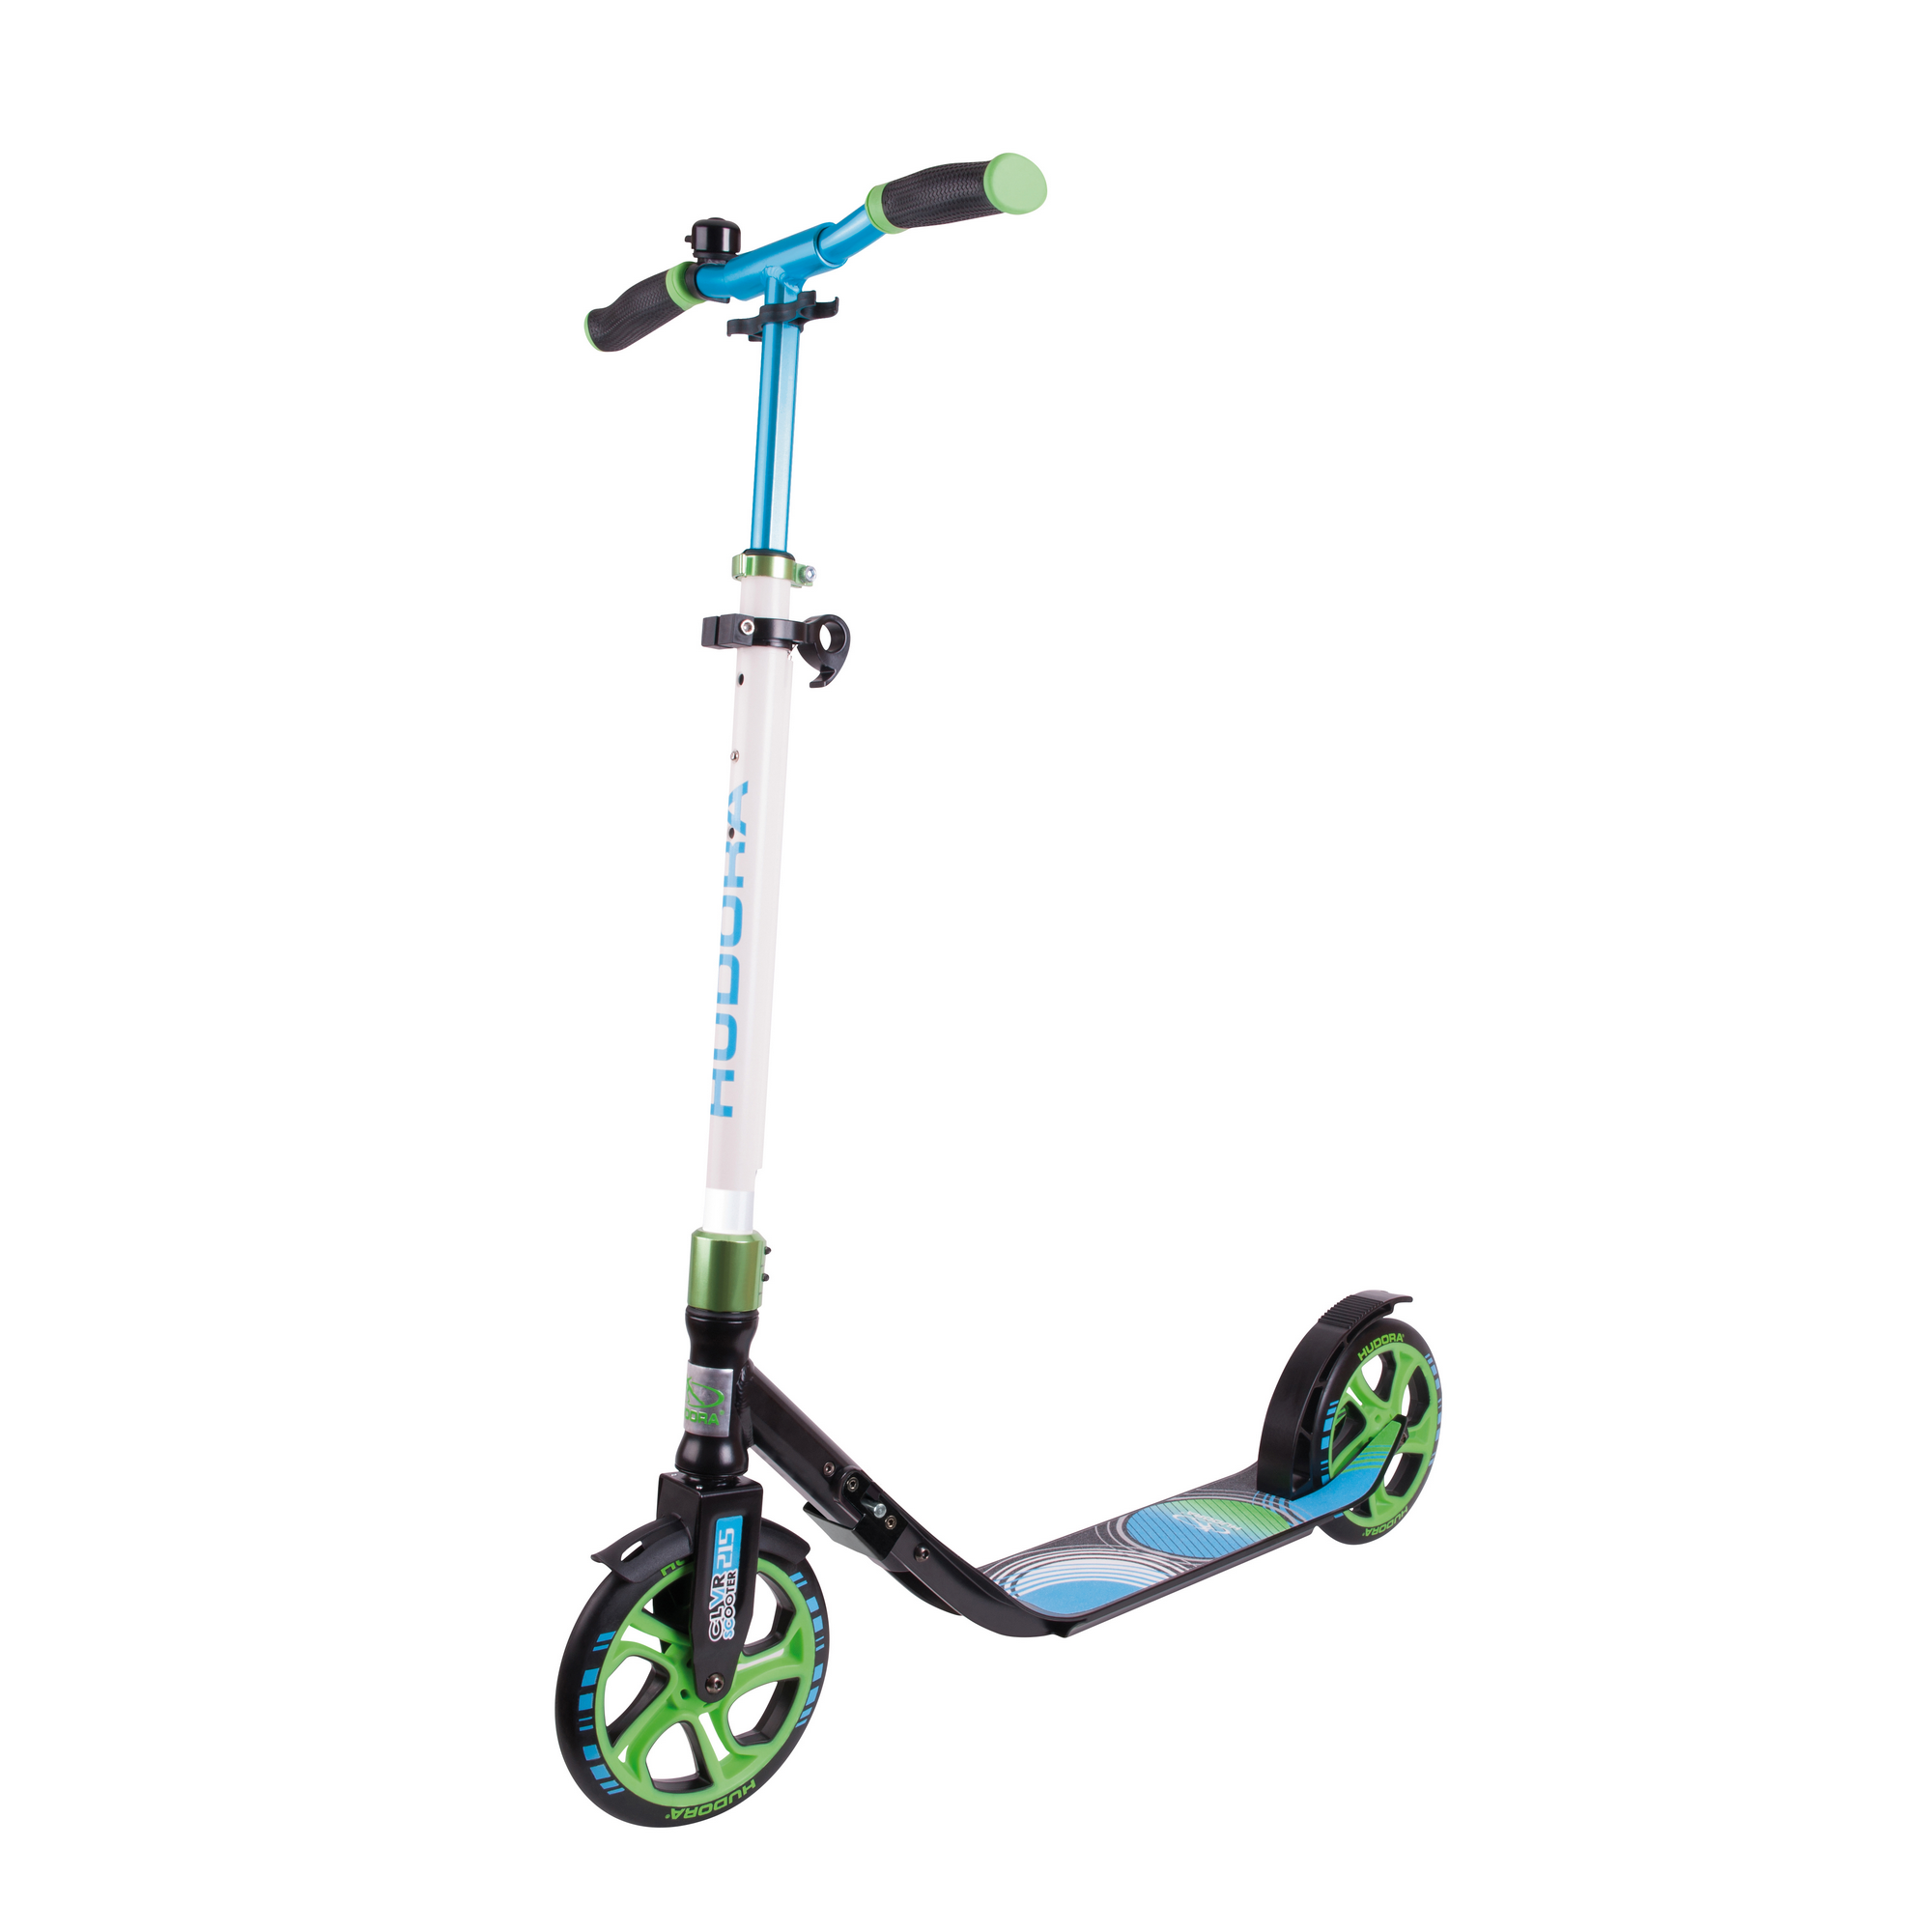 Scooter CLVR 215, blau/grün + product picture